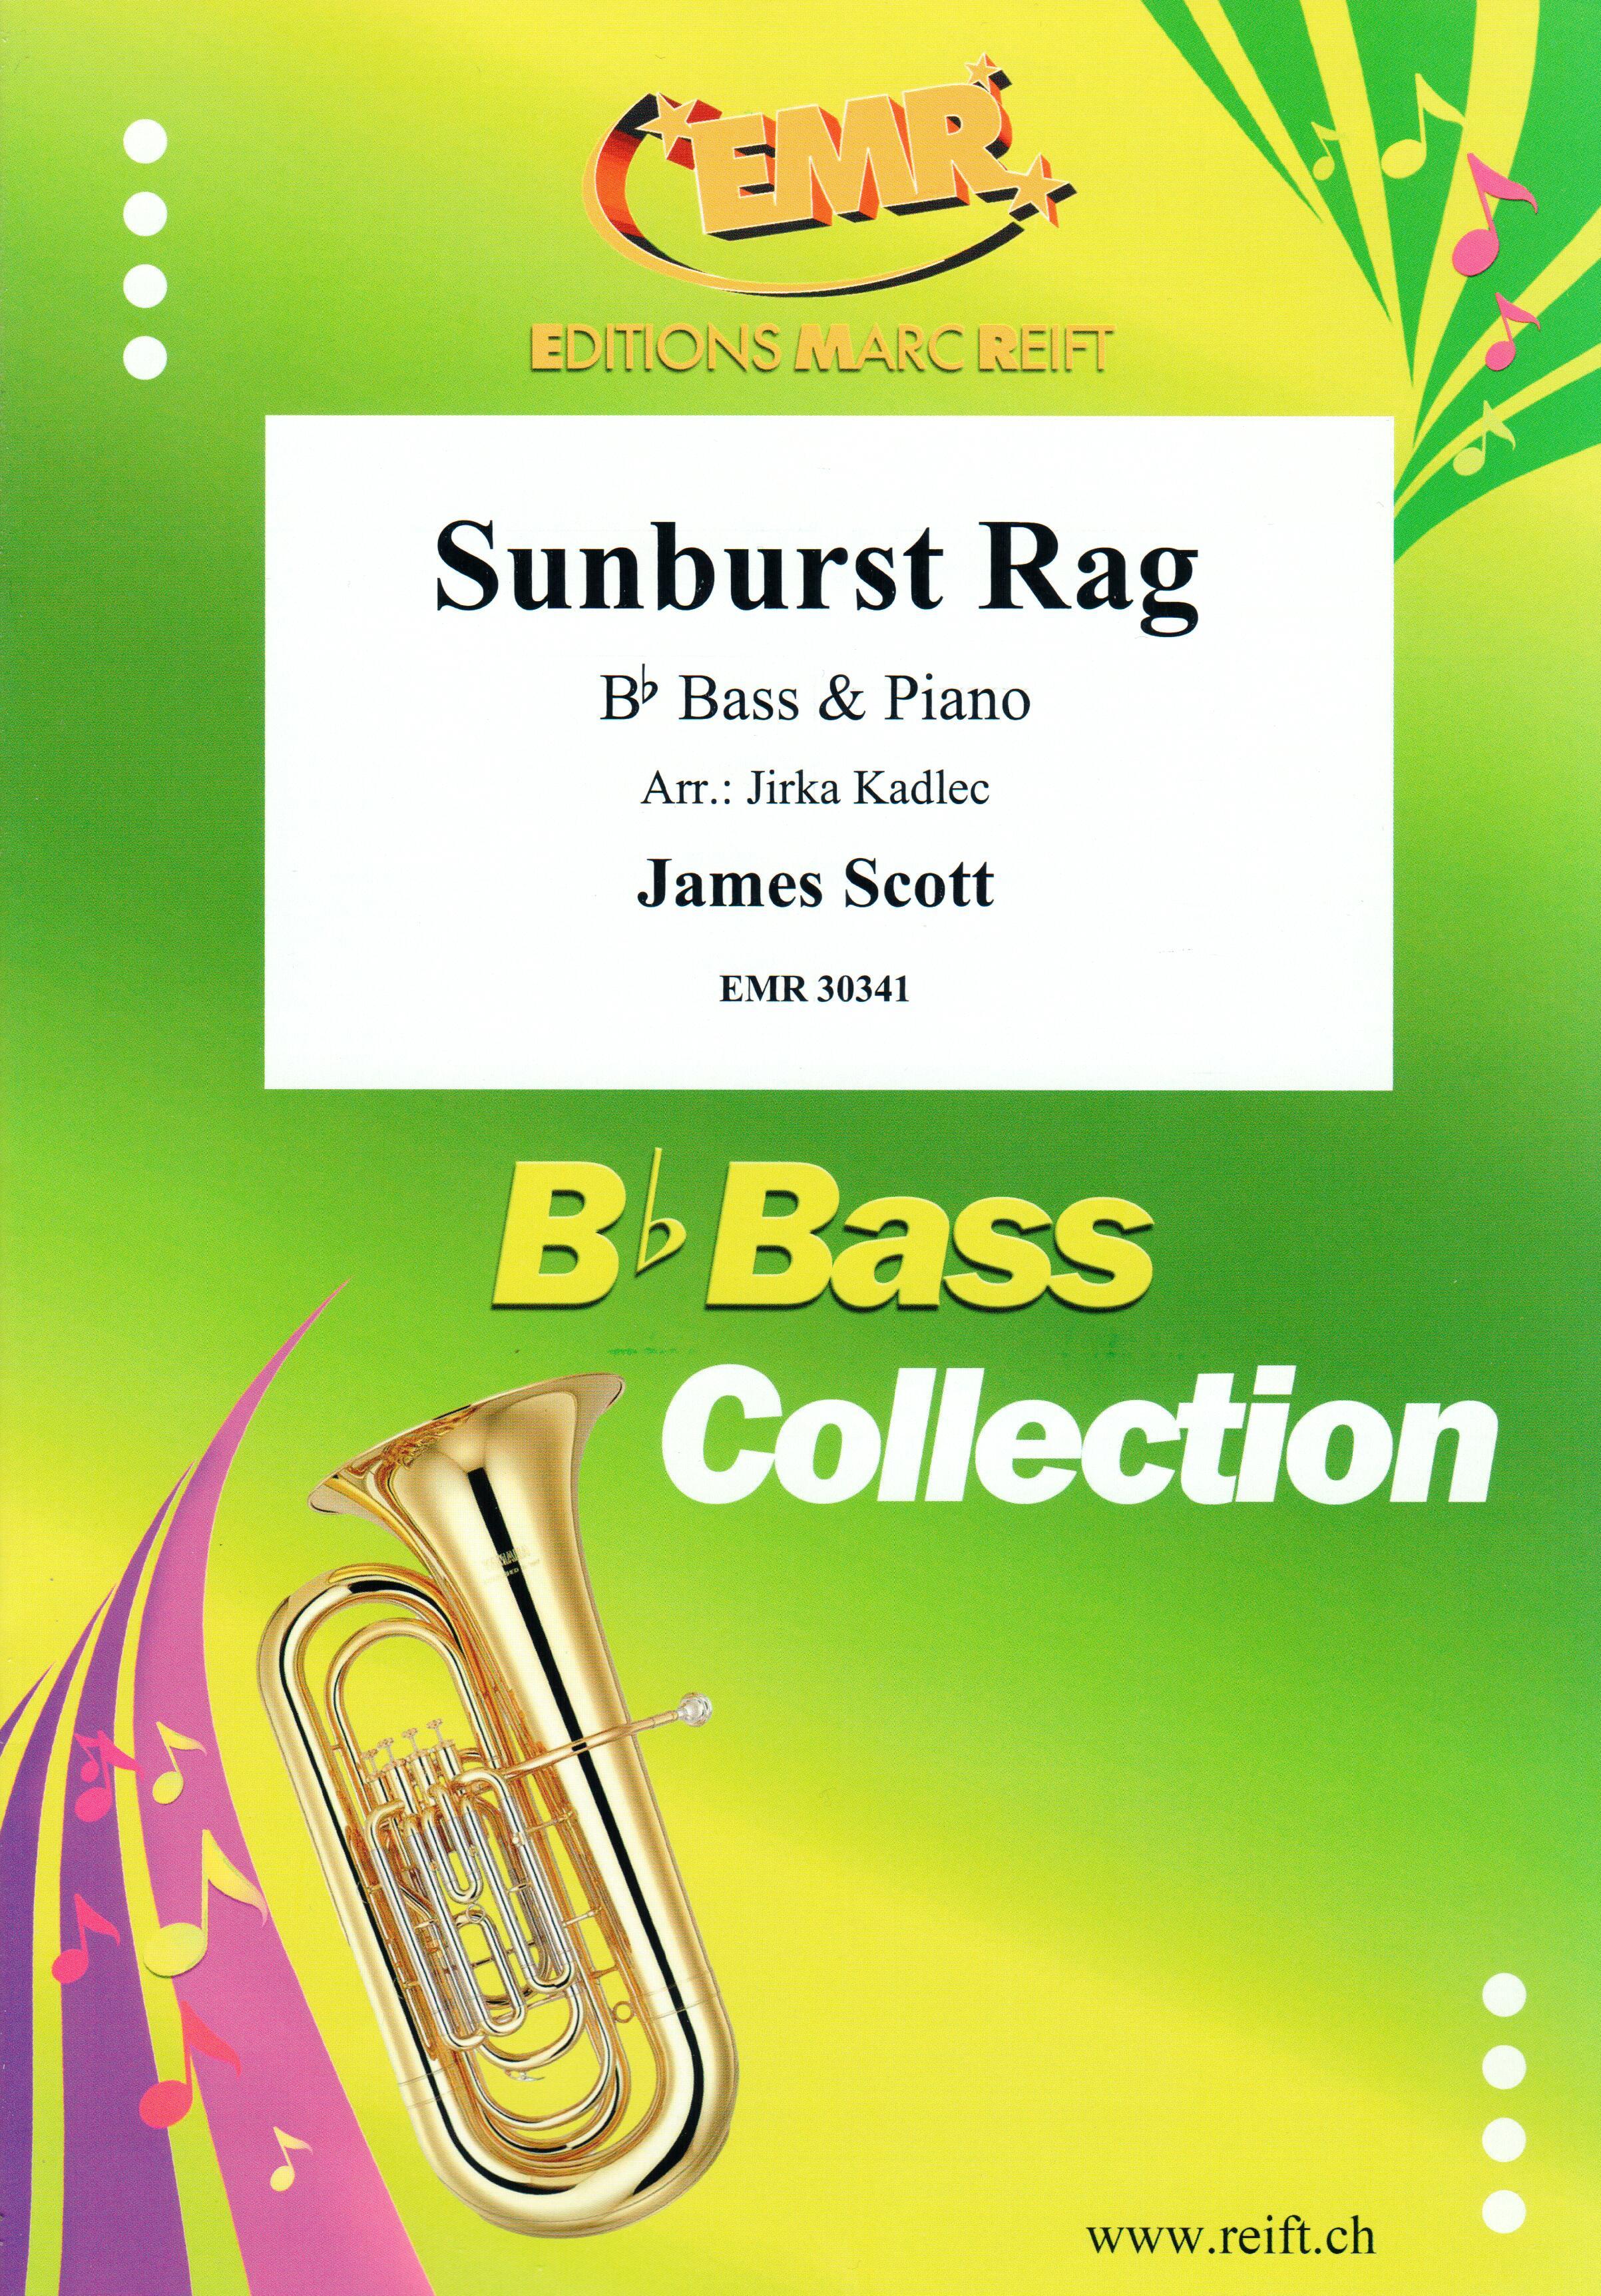 SUNBURST RAG, SOLOS - E♭. Bass